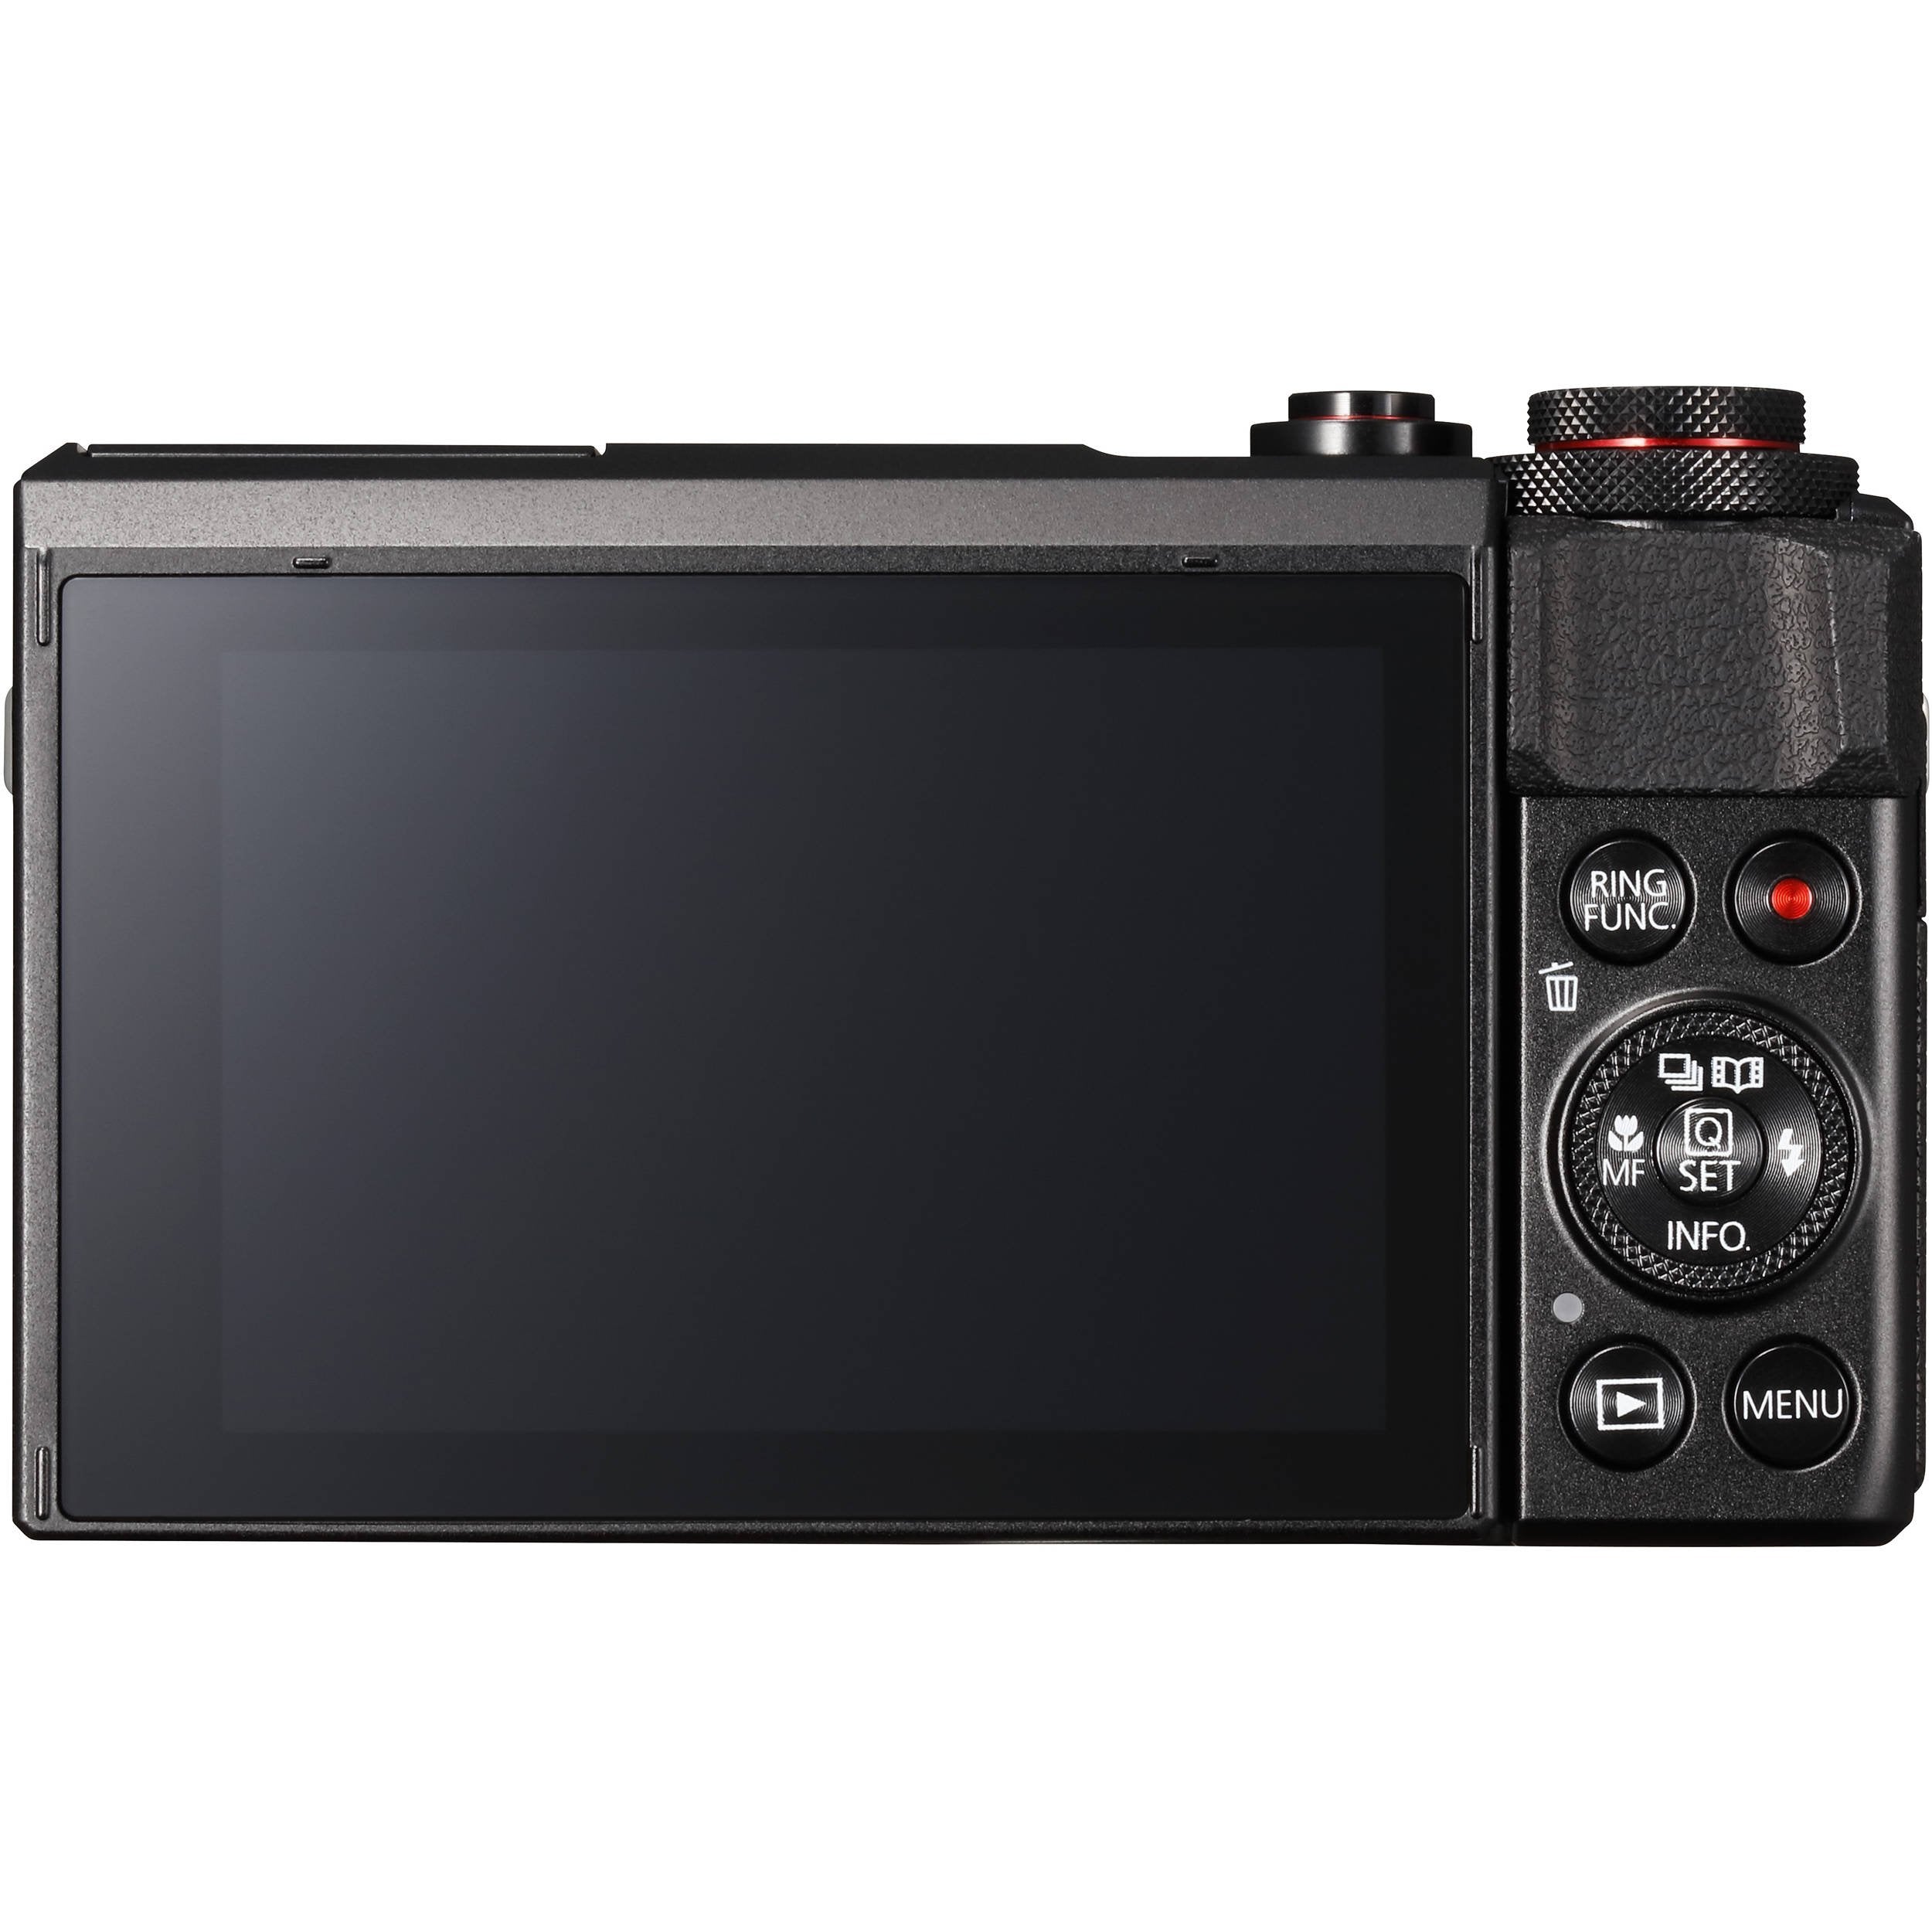 Canon PowerShot G7 X Mark II Digital Camera (Intl Model) + Camera Case + Cleaning Kit